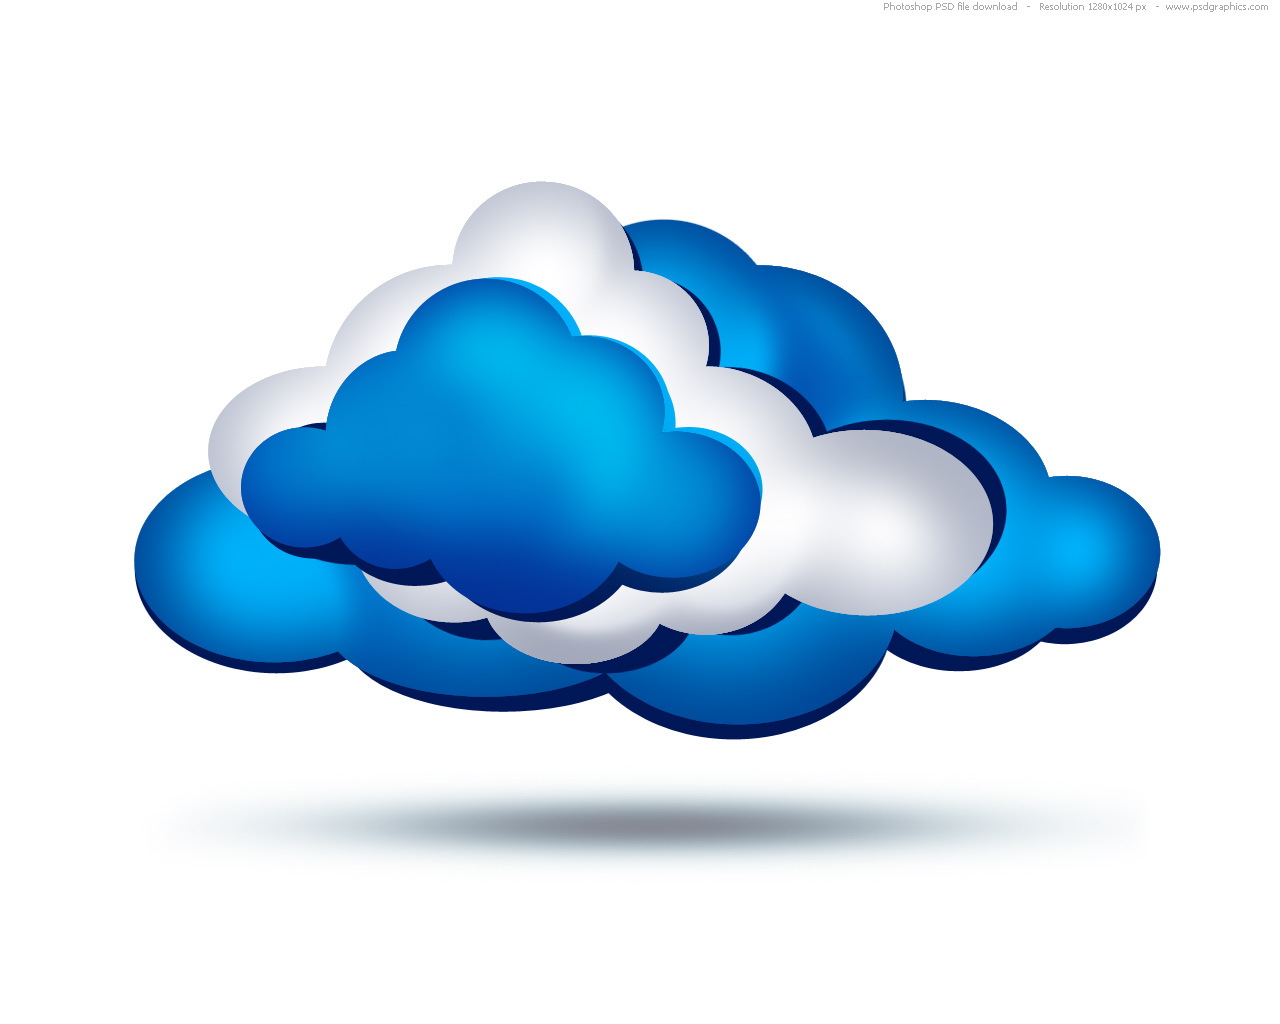 7 Internet Cloud Icon Images - Cloud Computing Icon, Cloud Storage ...